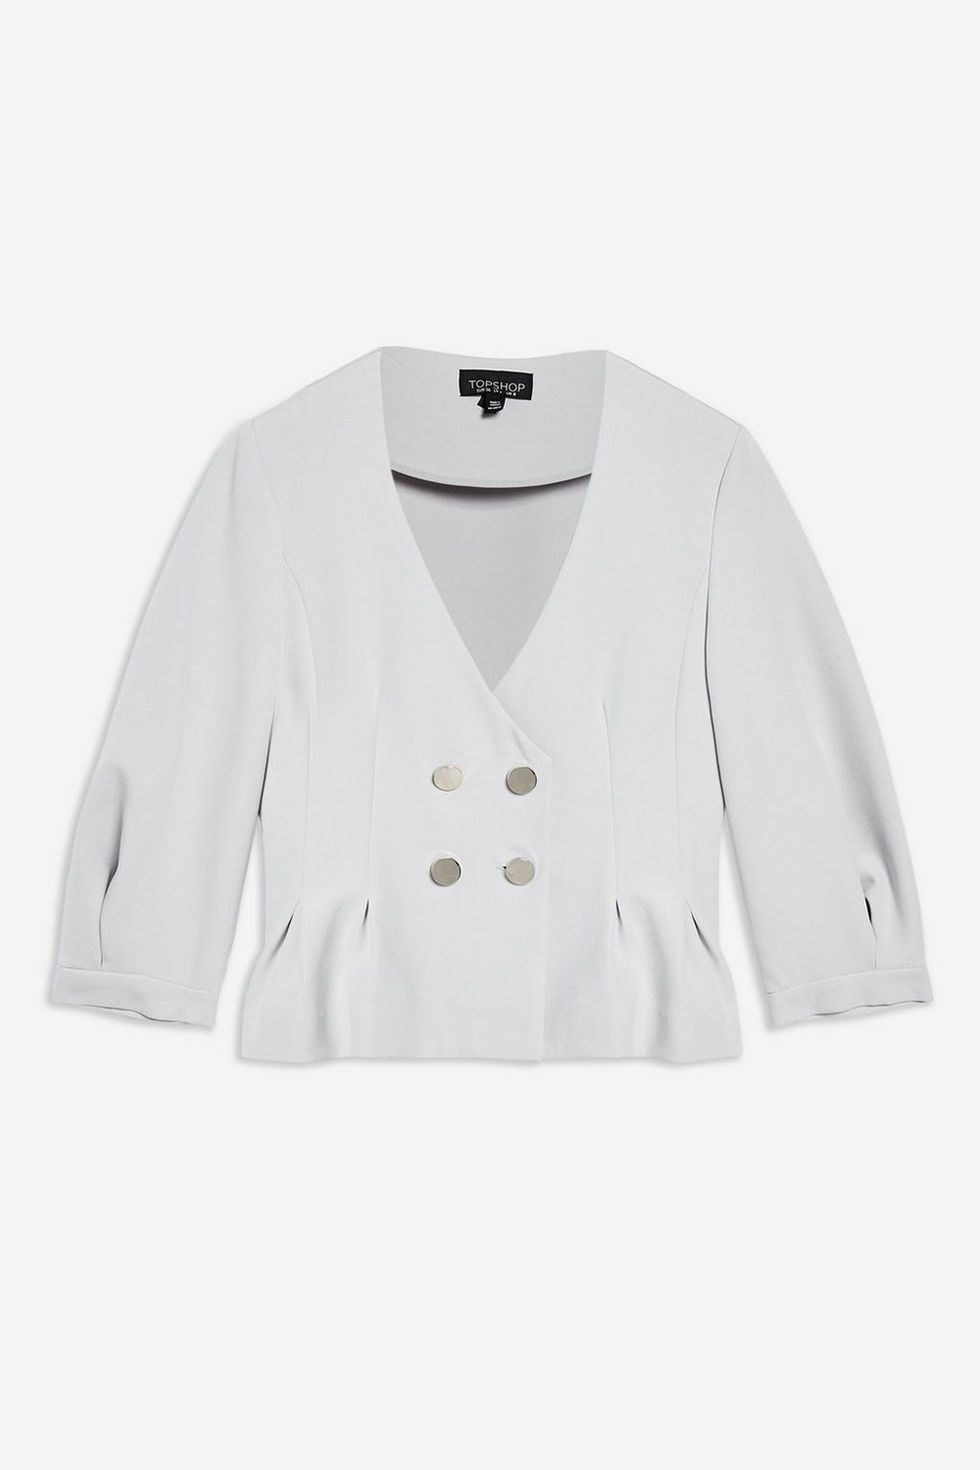 Clothing, White, Outerwear, Jacket, Sleeve, Blazer, Coat, Button, Top, Collar, 